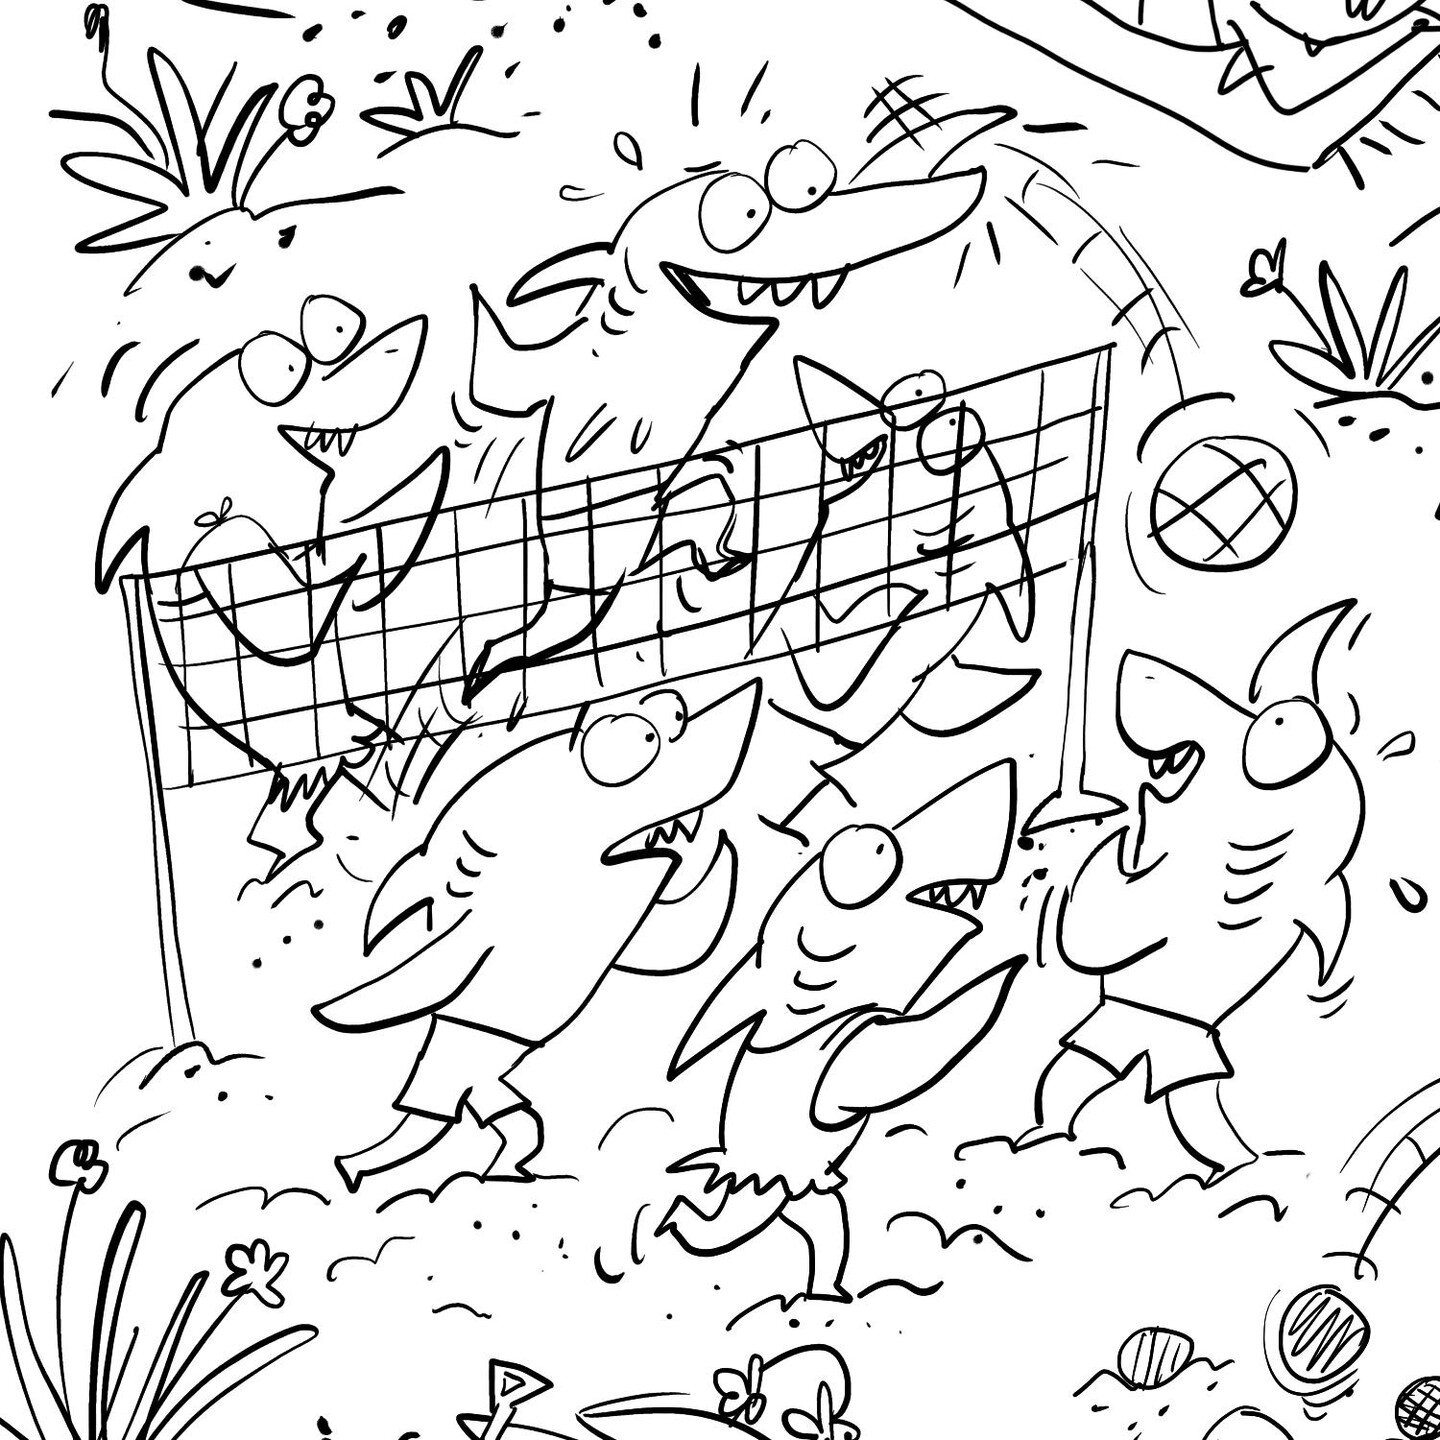 On the drawing board today... 😂🏐

#sketch #shark #sharkvolleyball #kidlitillustrator #kidlitartist #childrensbookillustrator #childrensbookillustration #kidlitillustration #kidlitillustration #cartooning #kidlitcomics #kidlitcartoonist